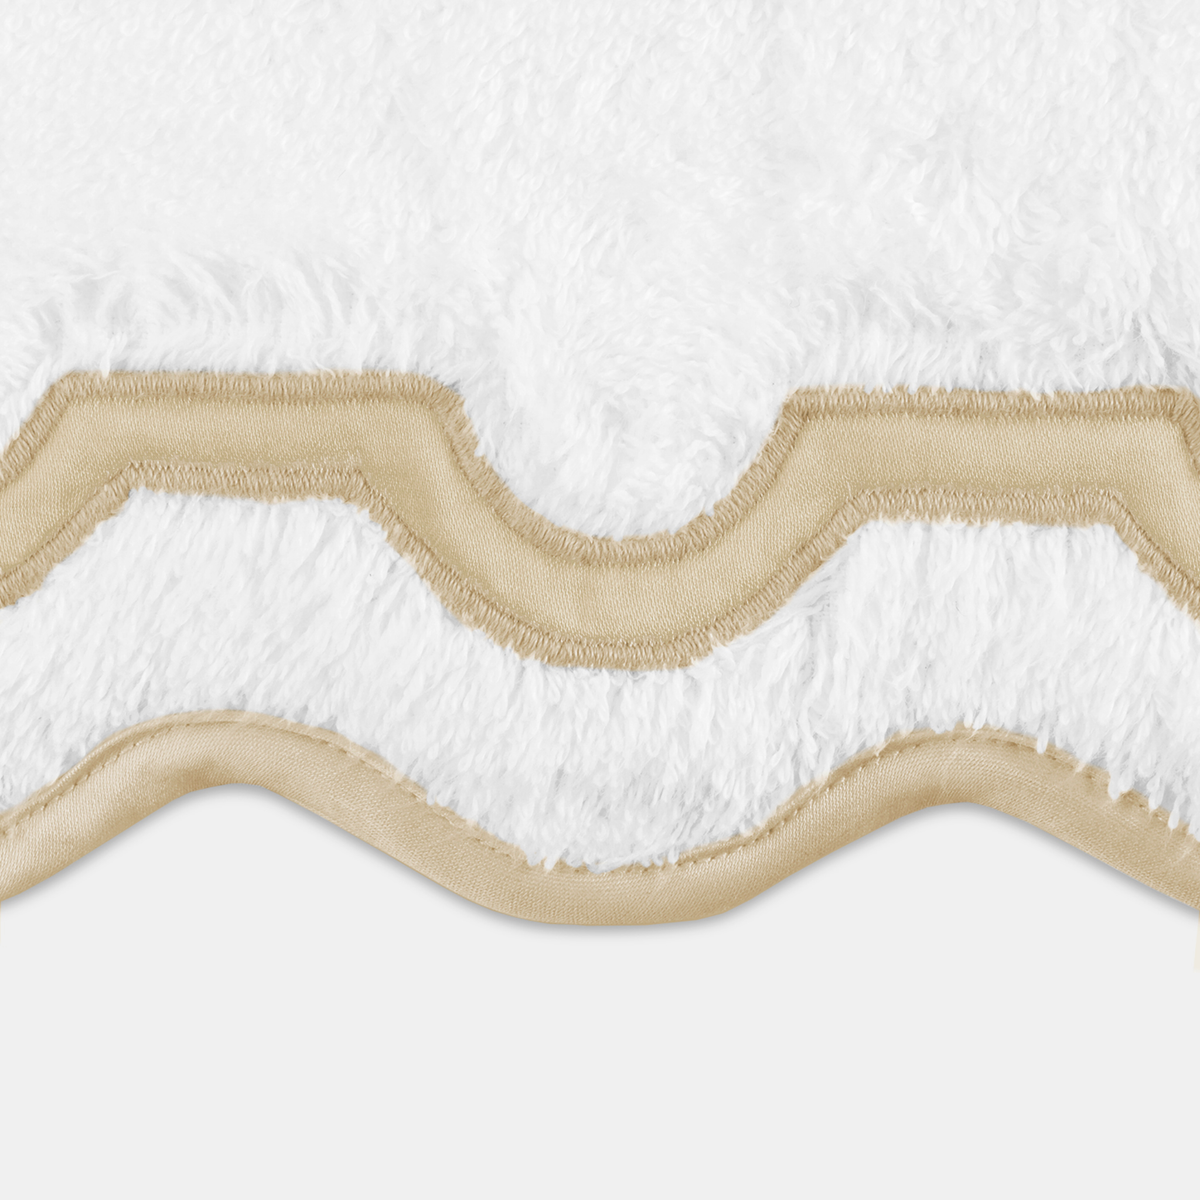 Swatch Sample of Matouk Mirasol Bath Towel in Champagne Color